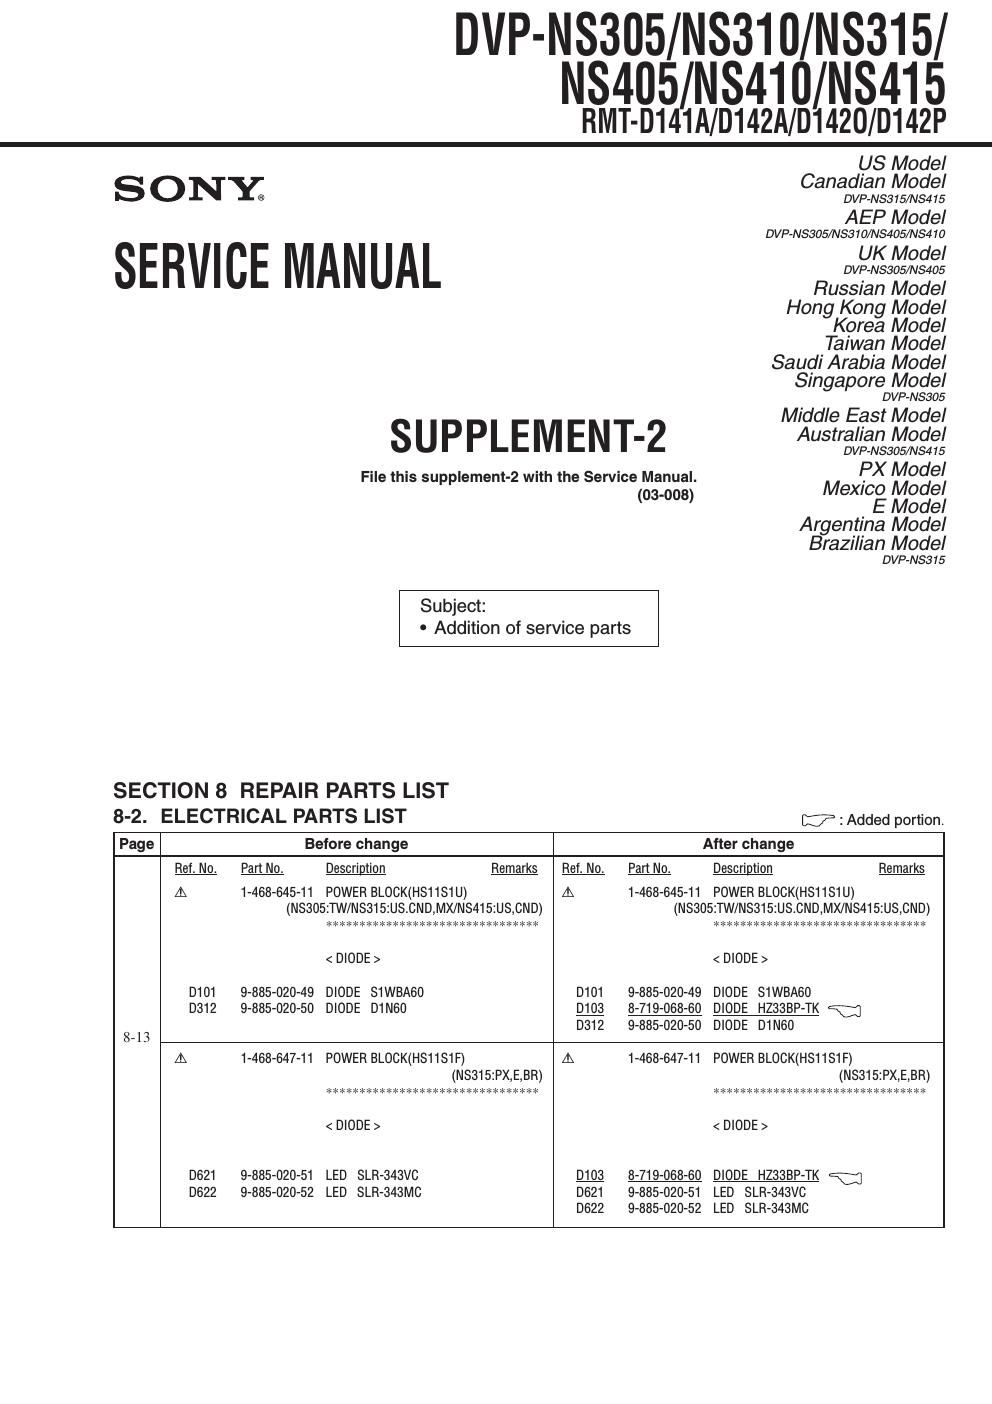 sony dvpns 410 service manual